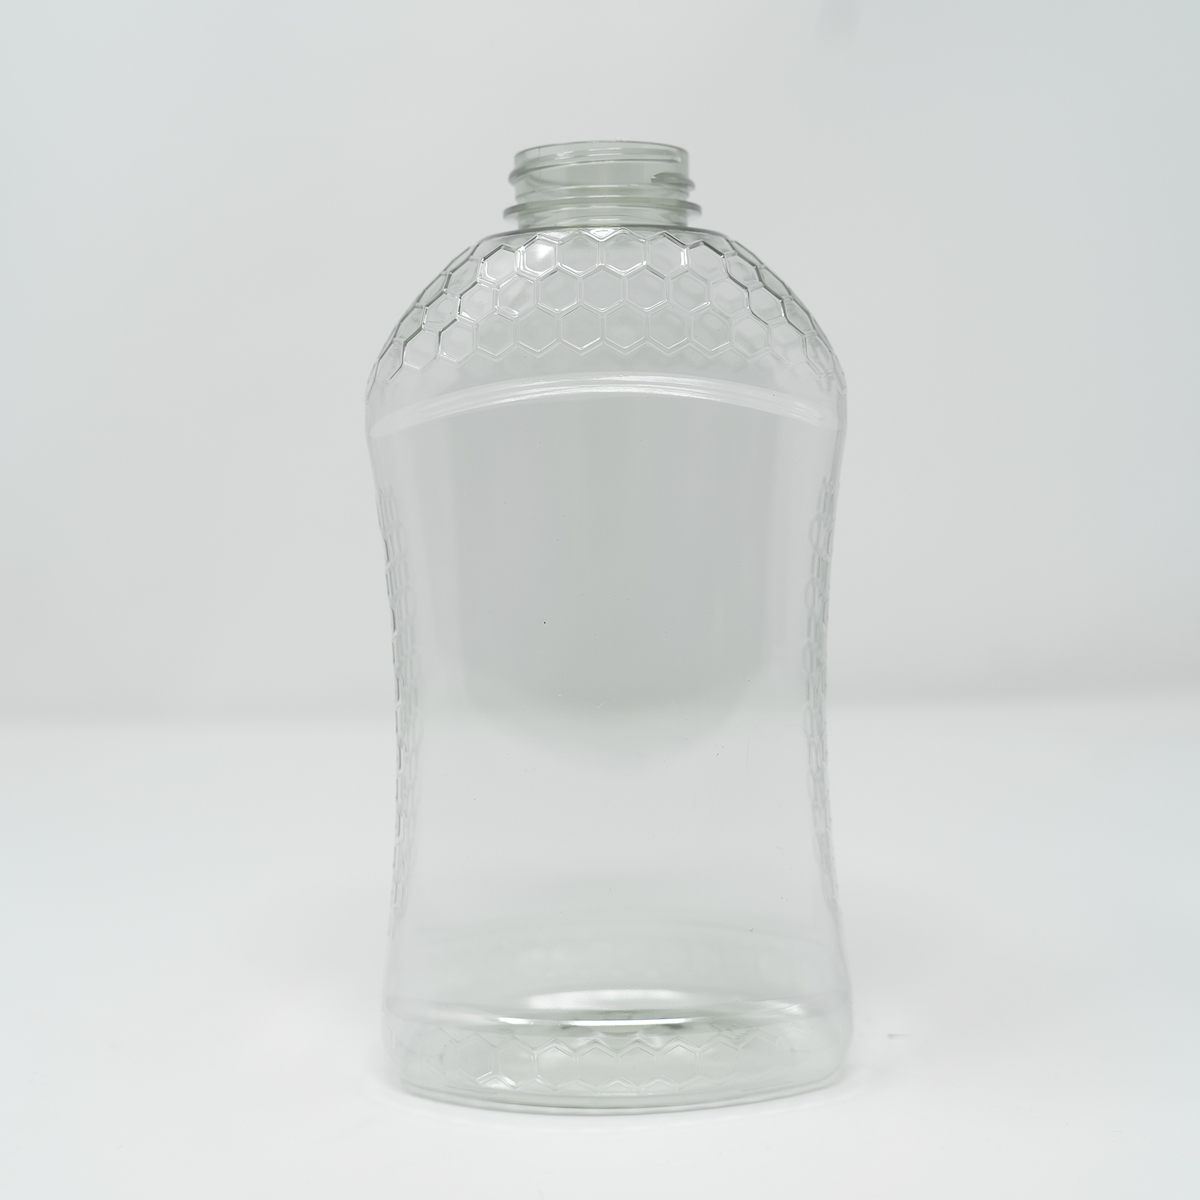 2 lb Honeycomb Bottles - 159 Case